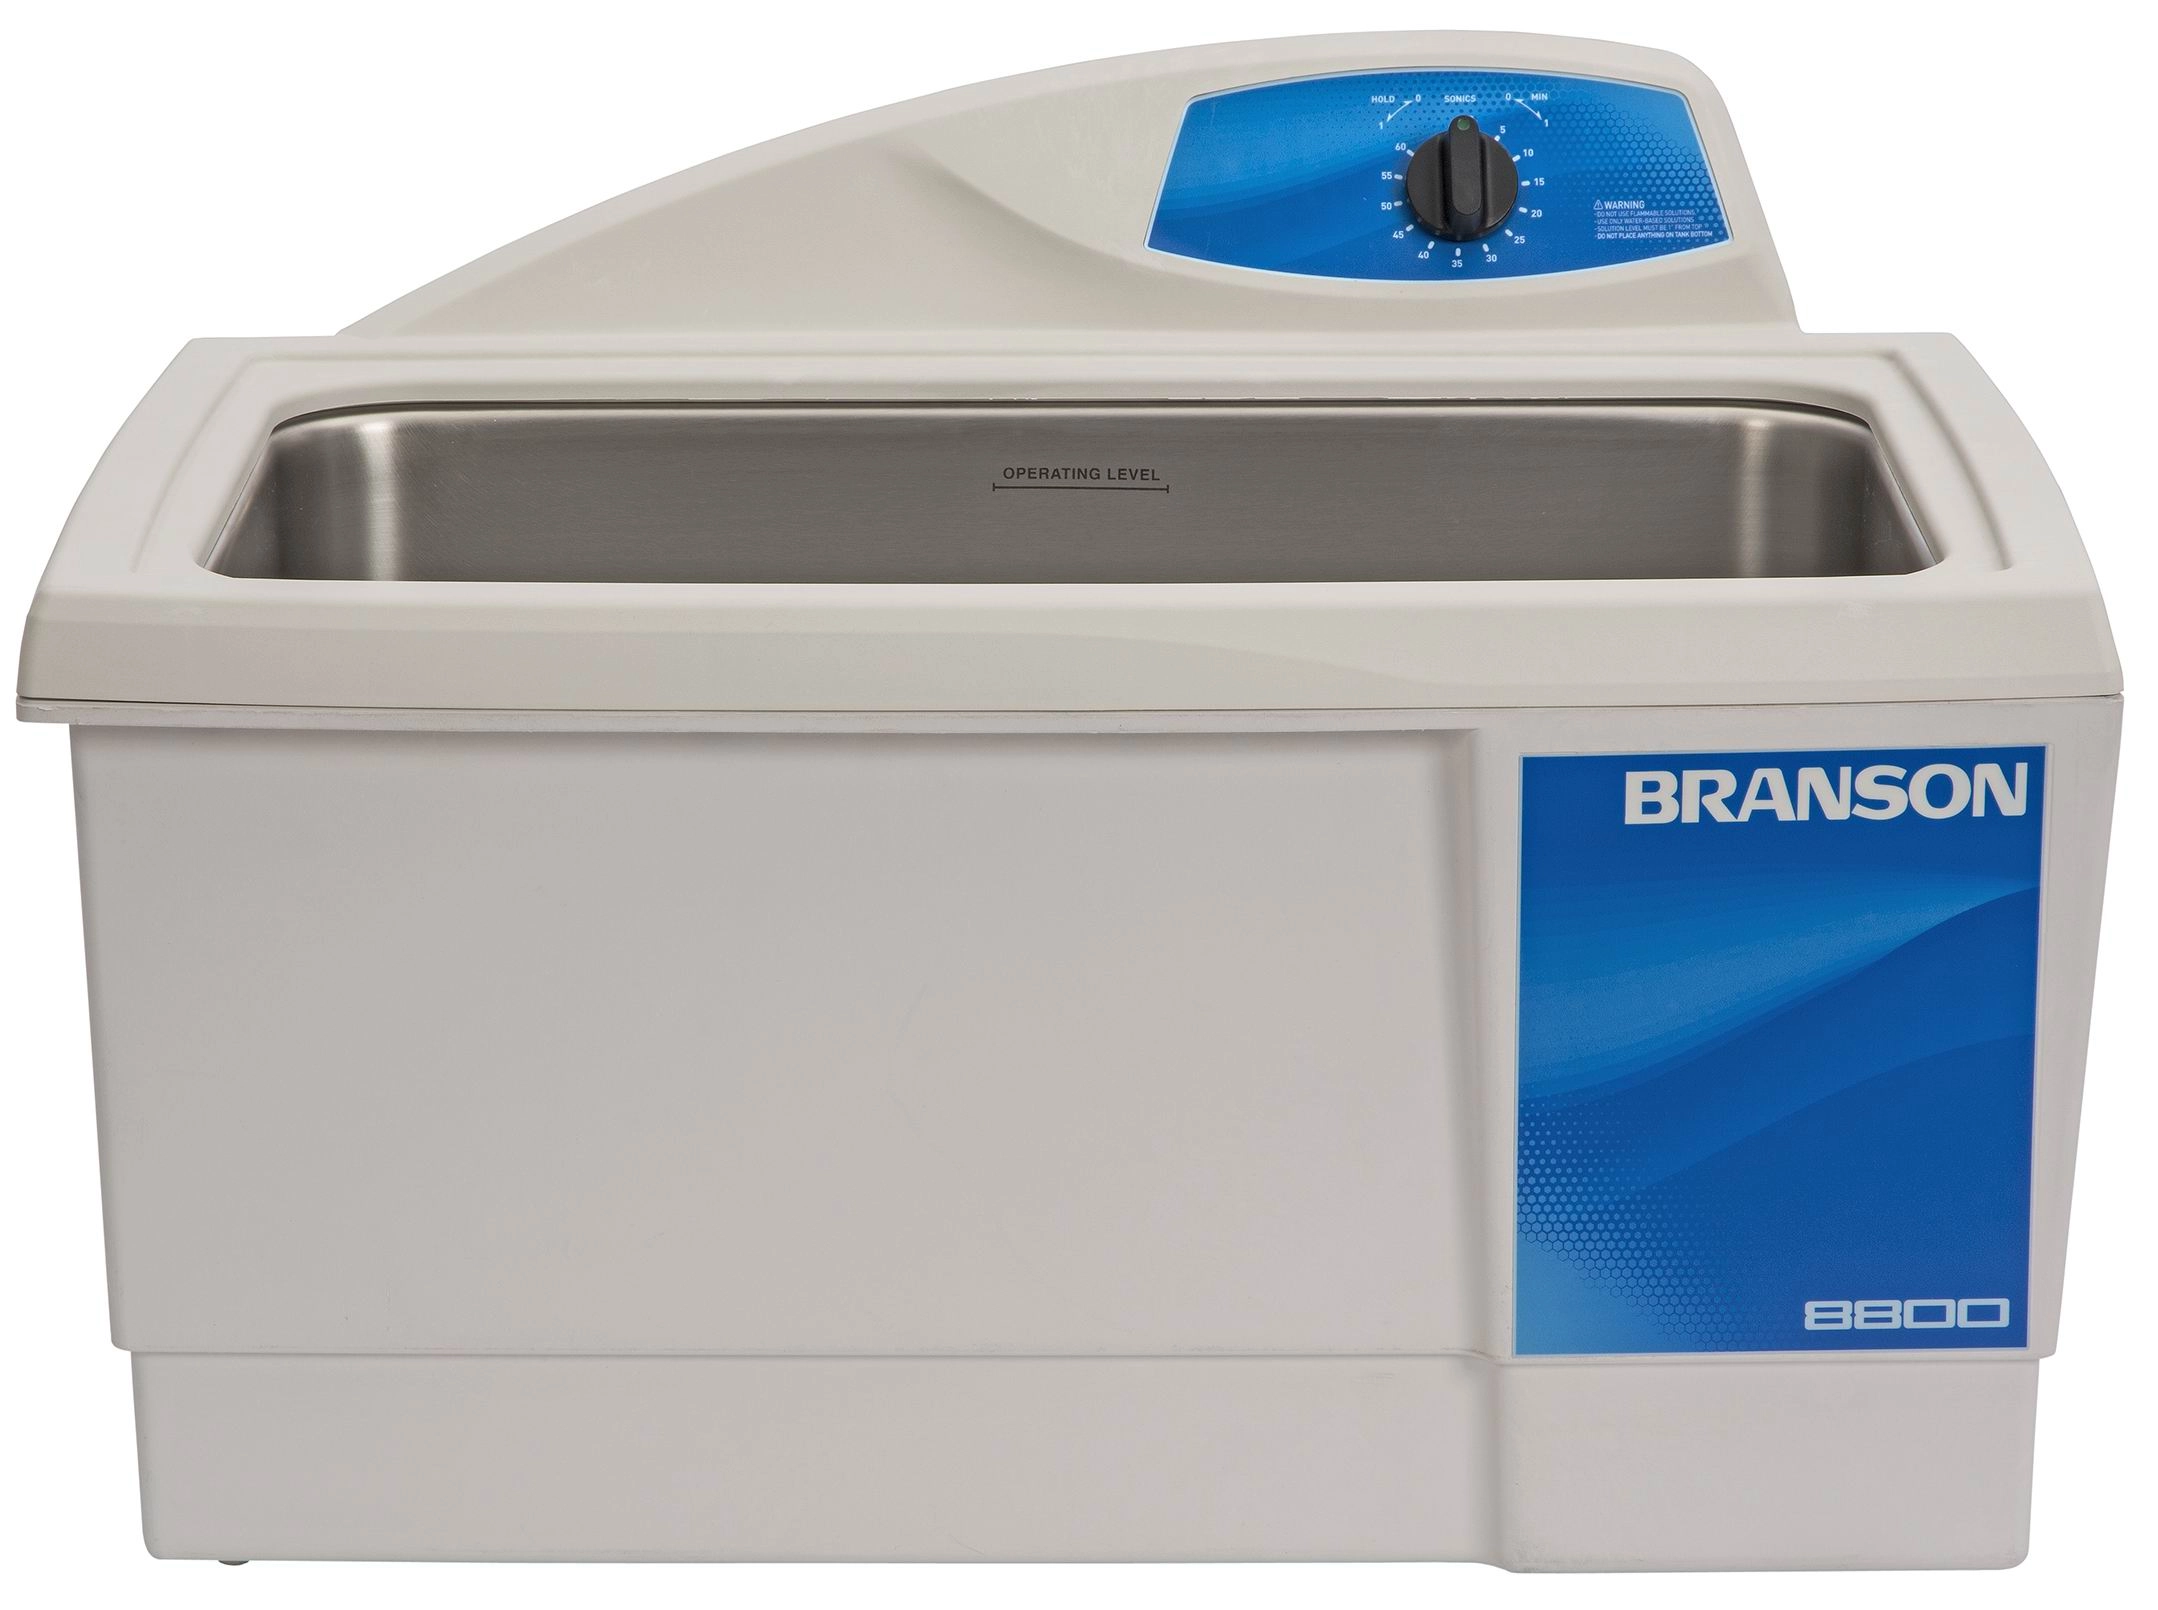 Branson M8800 Ultrasonic Cleaner